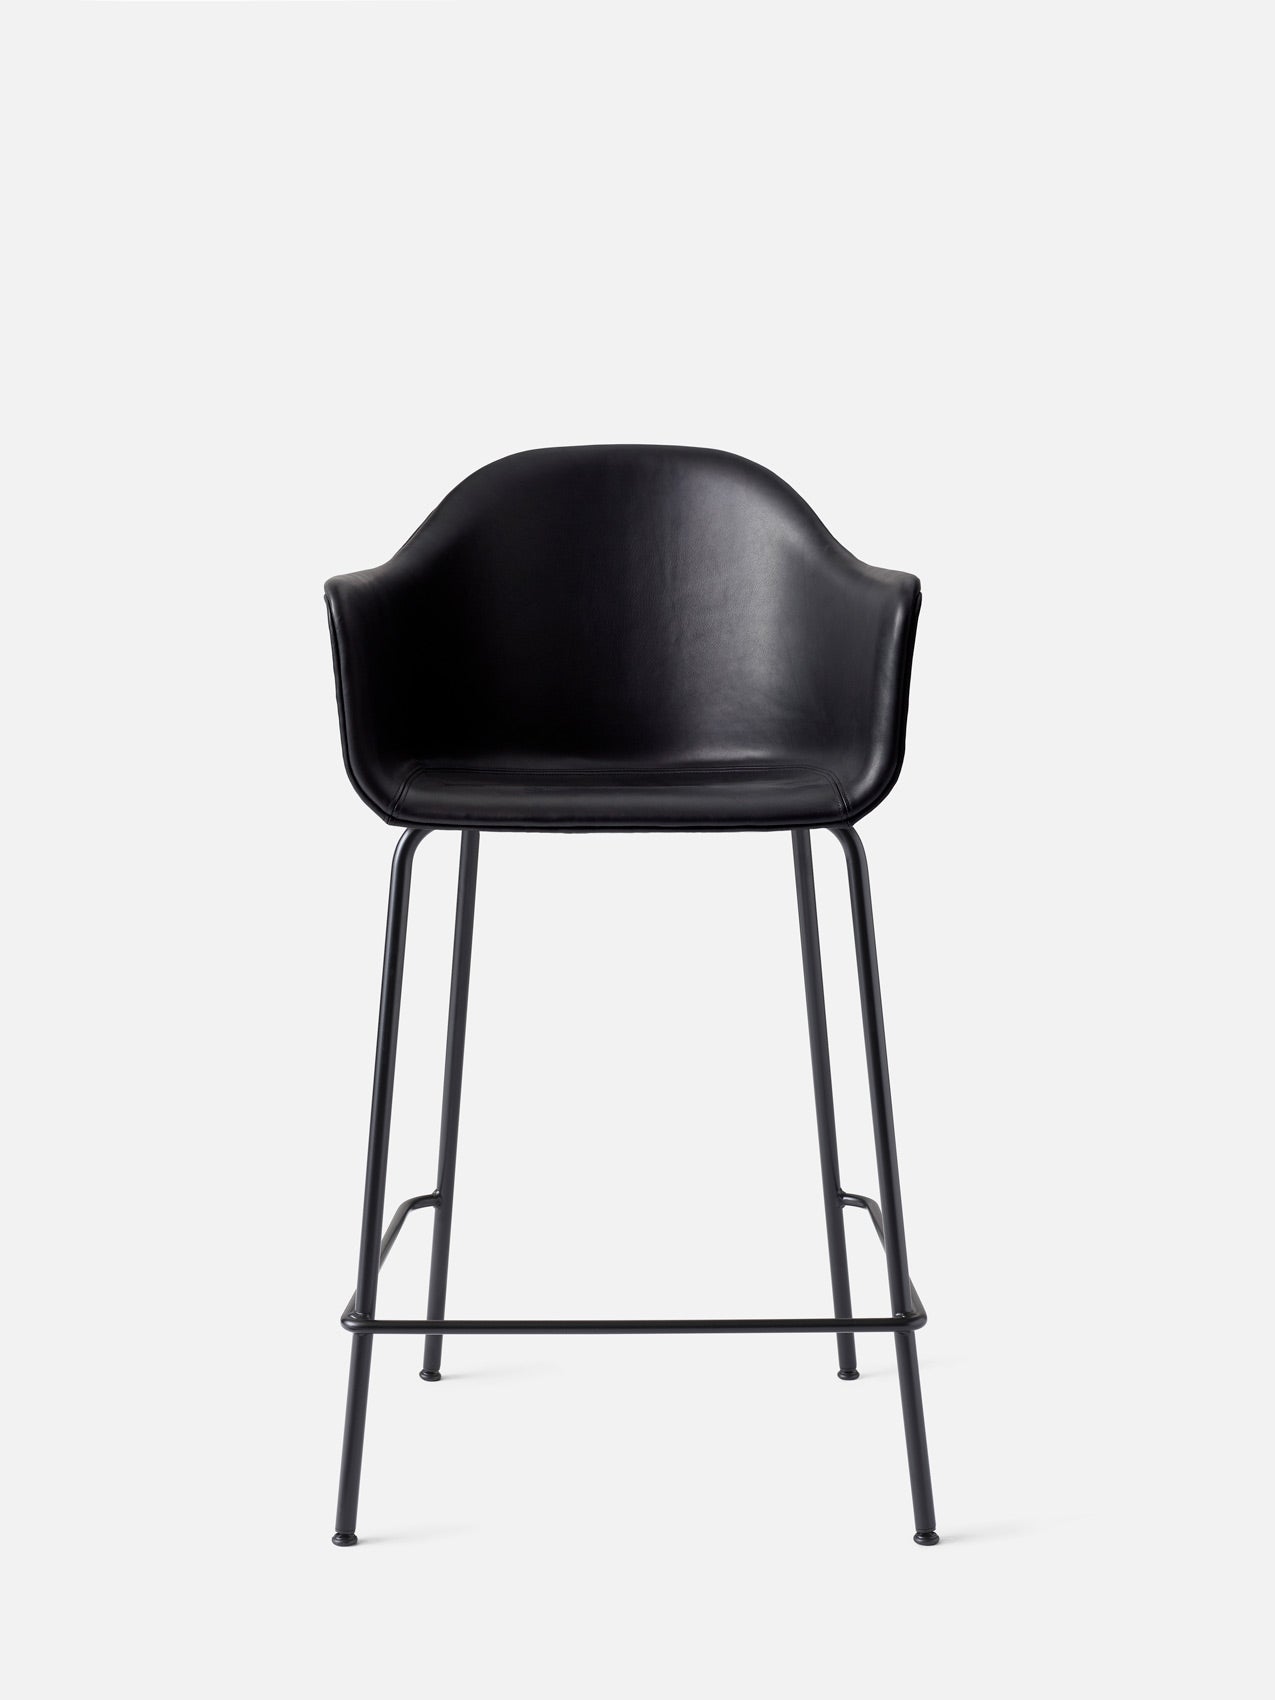 Harbour Arm Chair, Upholstered-Chair-Norm Architects-Counter Height (Seat 24.8in H)/Black Steel-0842 Black/Dakar-menu-minimalist-modern-danish-design-home-decor